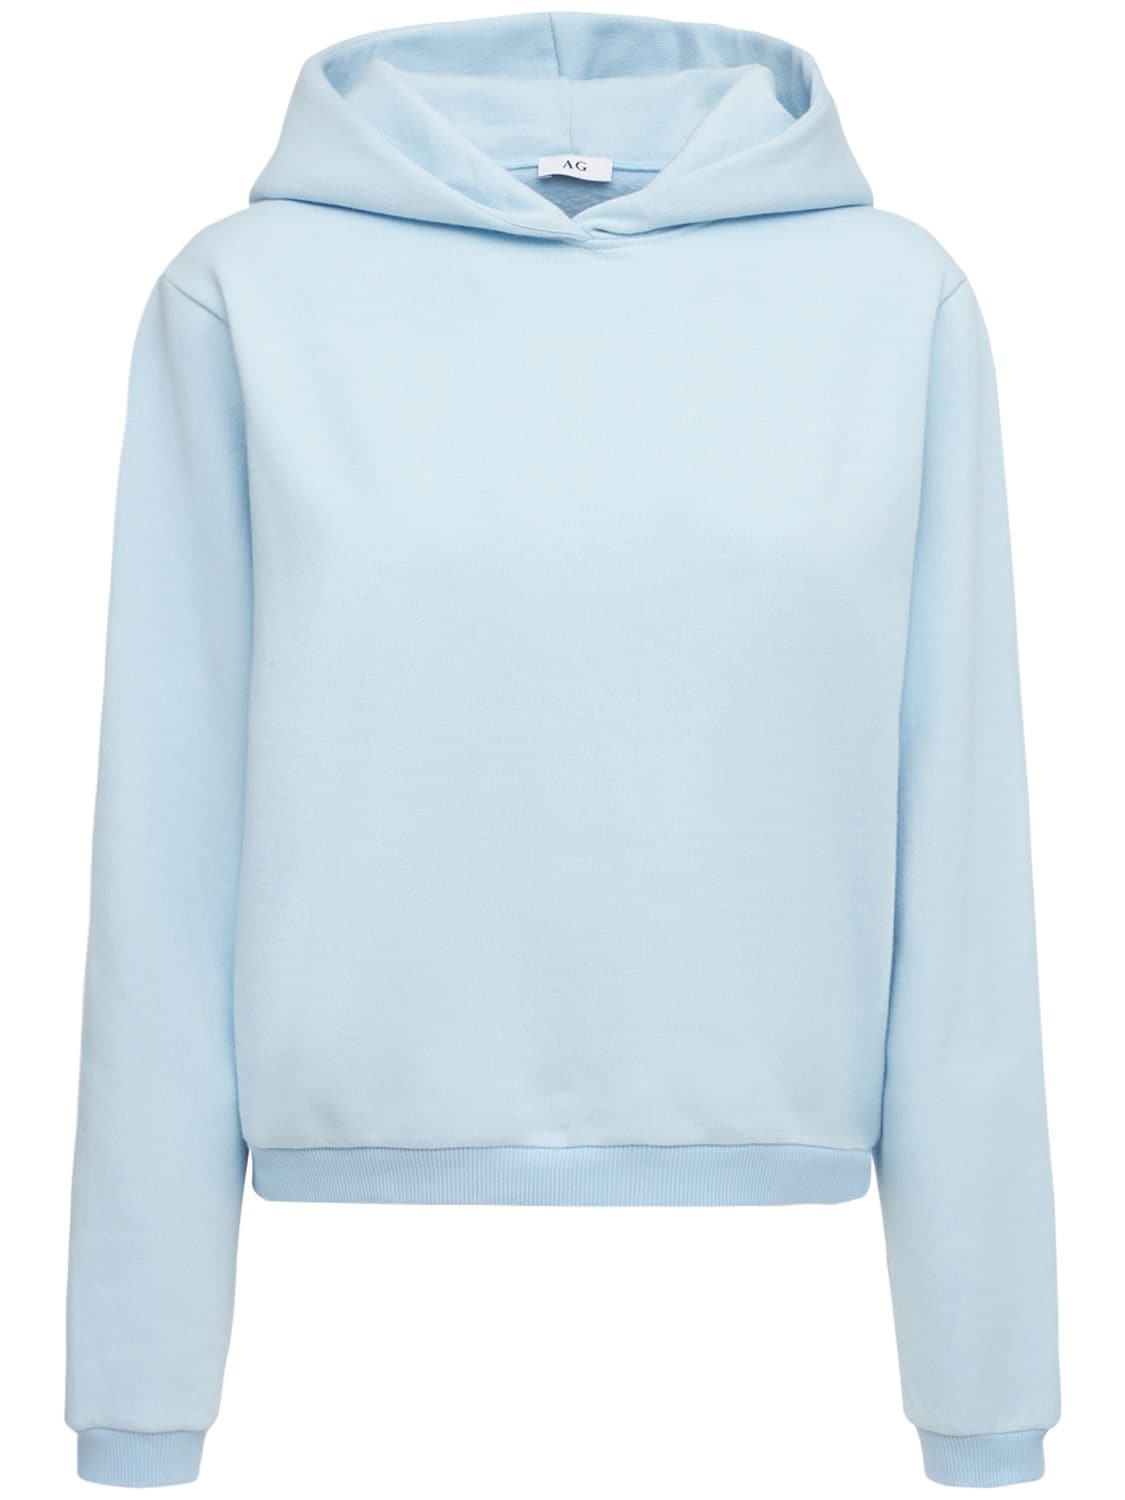 Ag Cotton Sweatshirt Hoodie In Light Blue